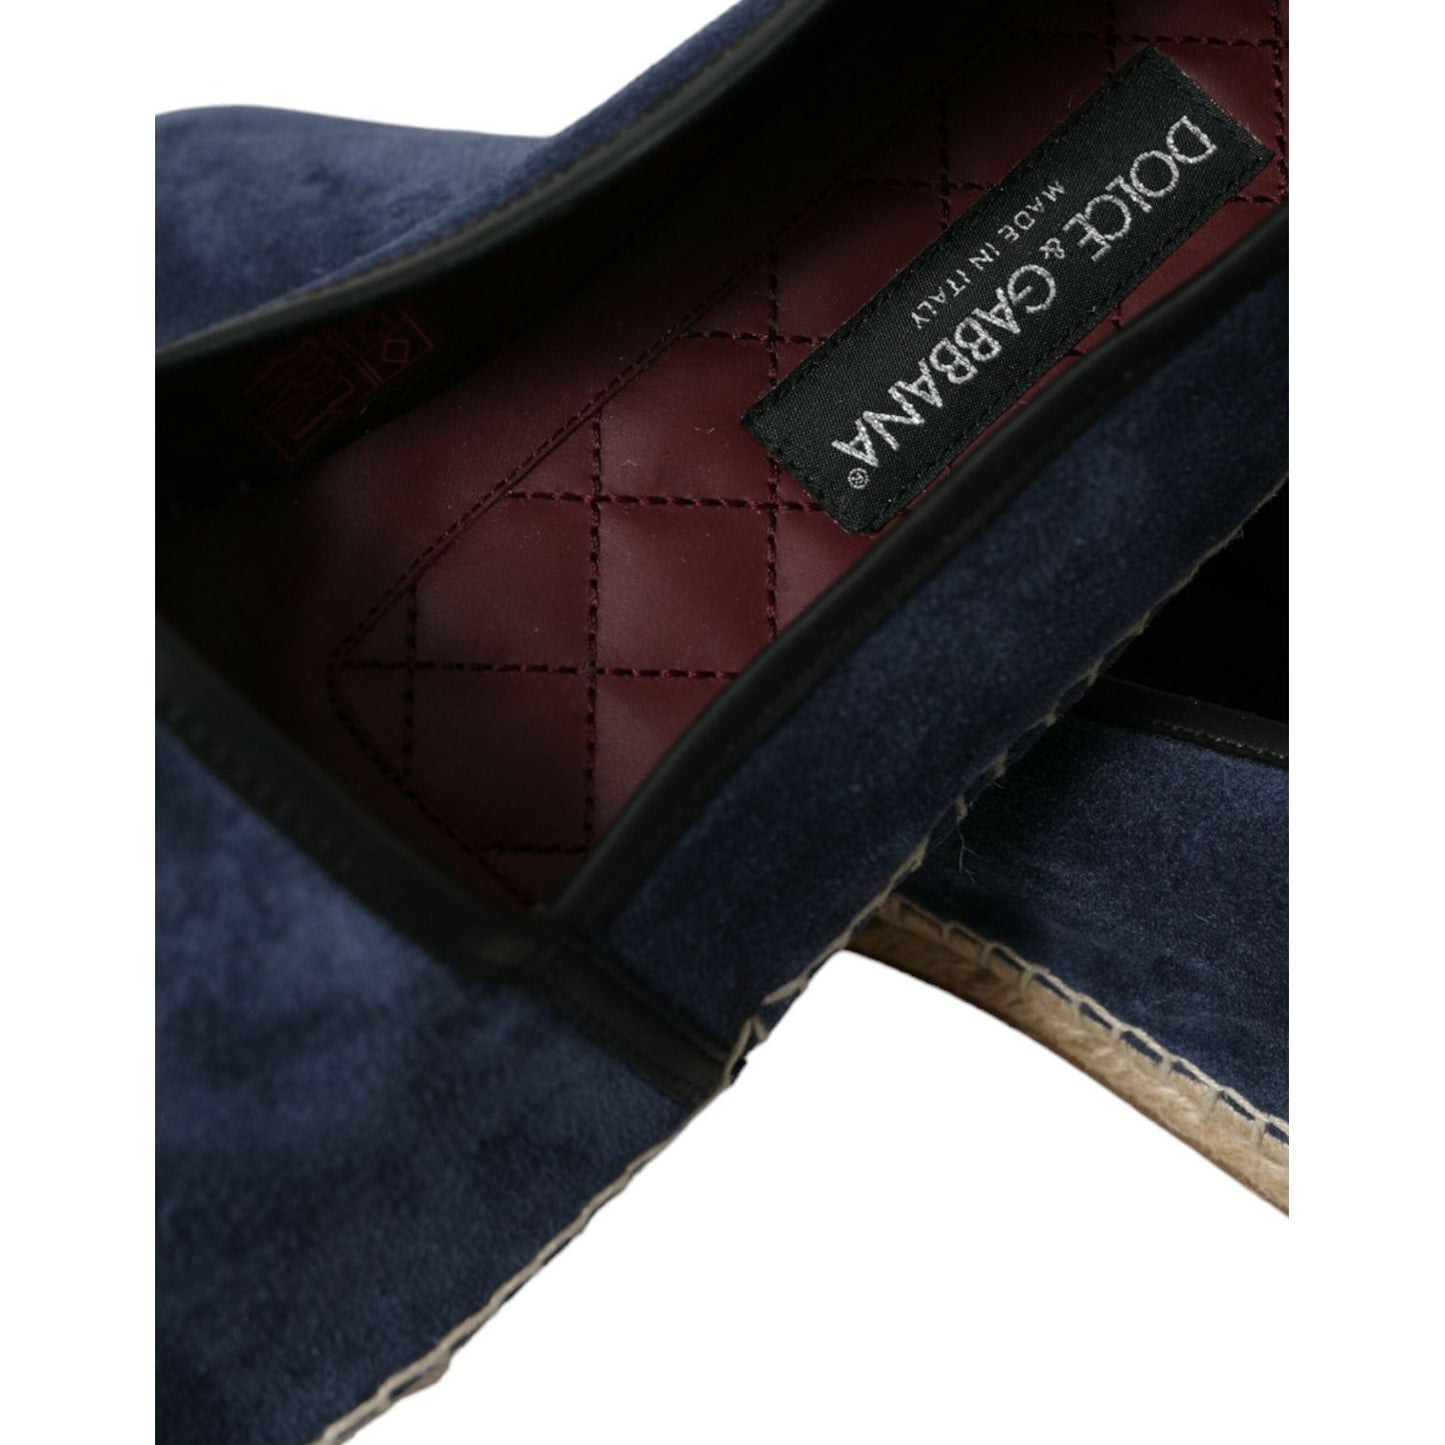 Dolce & Gabbana Elegant Navy Suede Leather Espadrilles blue-leather-suede-slip-on-espadrille-shoes